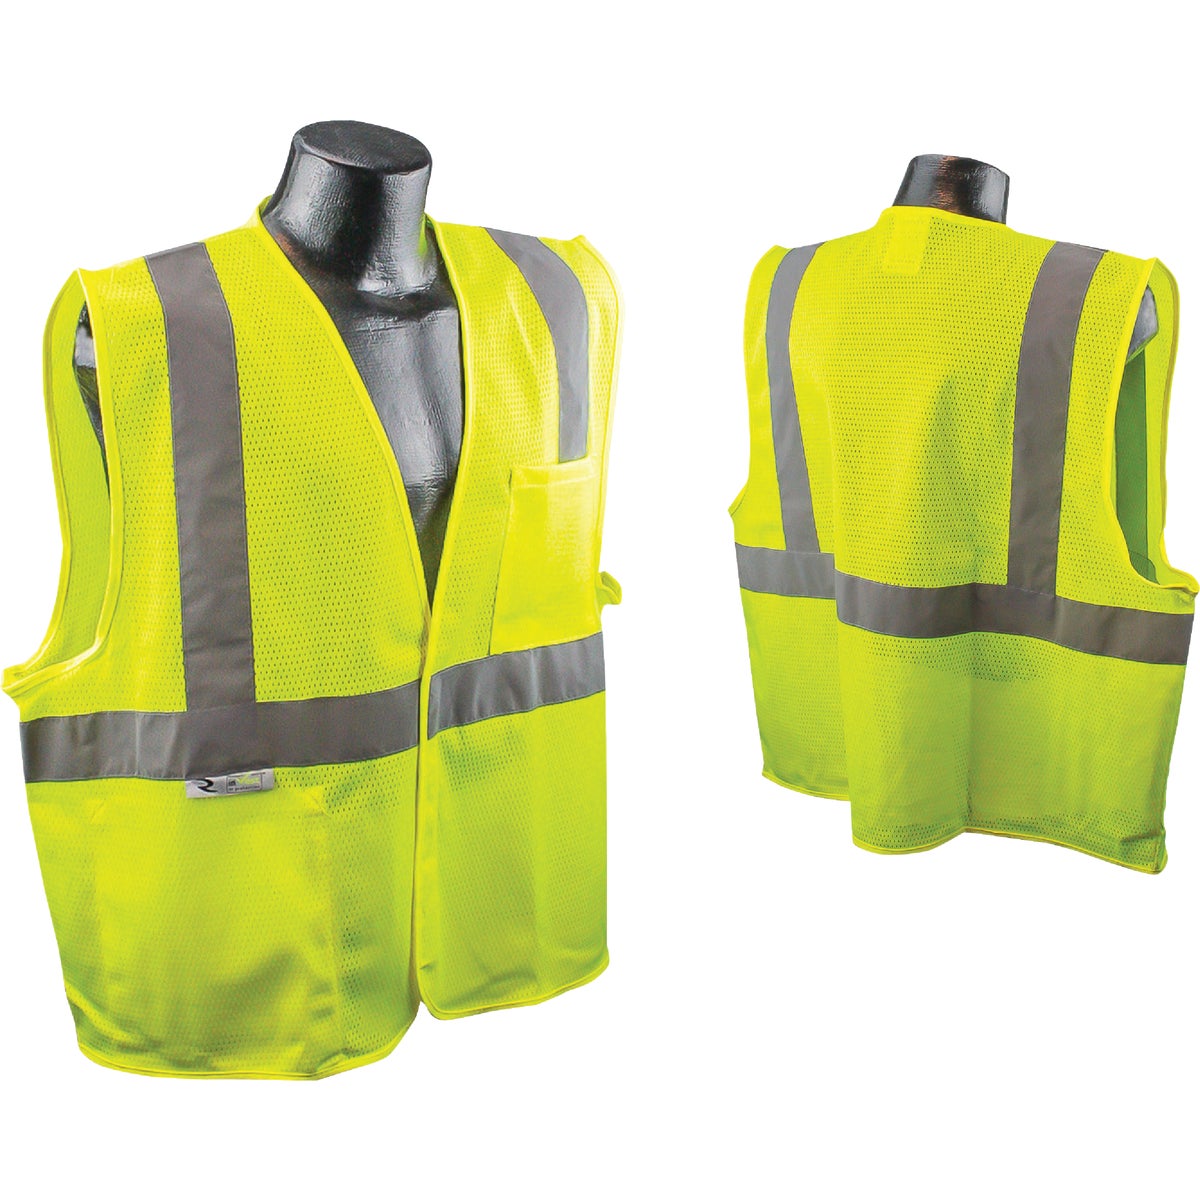 Safety Works Professional ANSI Class 2 Hi Vis Lime Mesh Safety Vest, 1 Size Fits Most